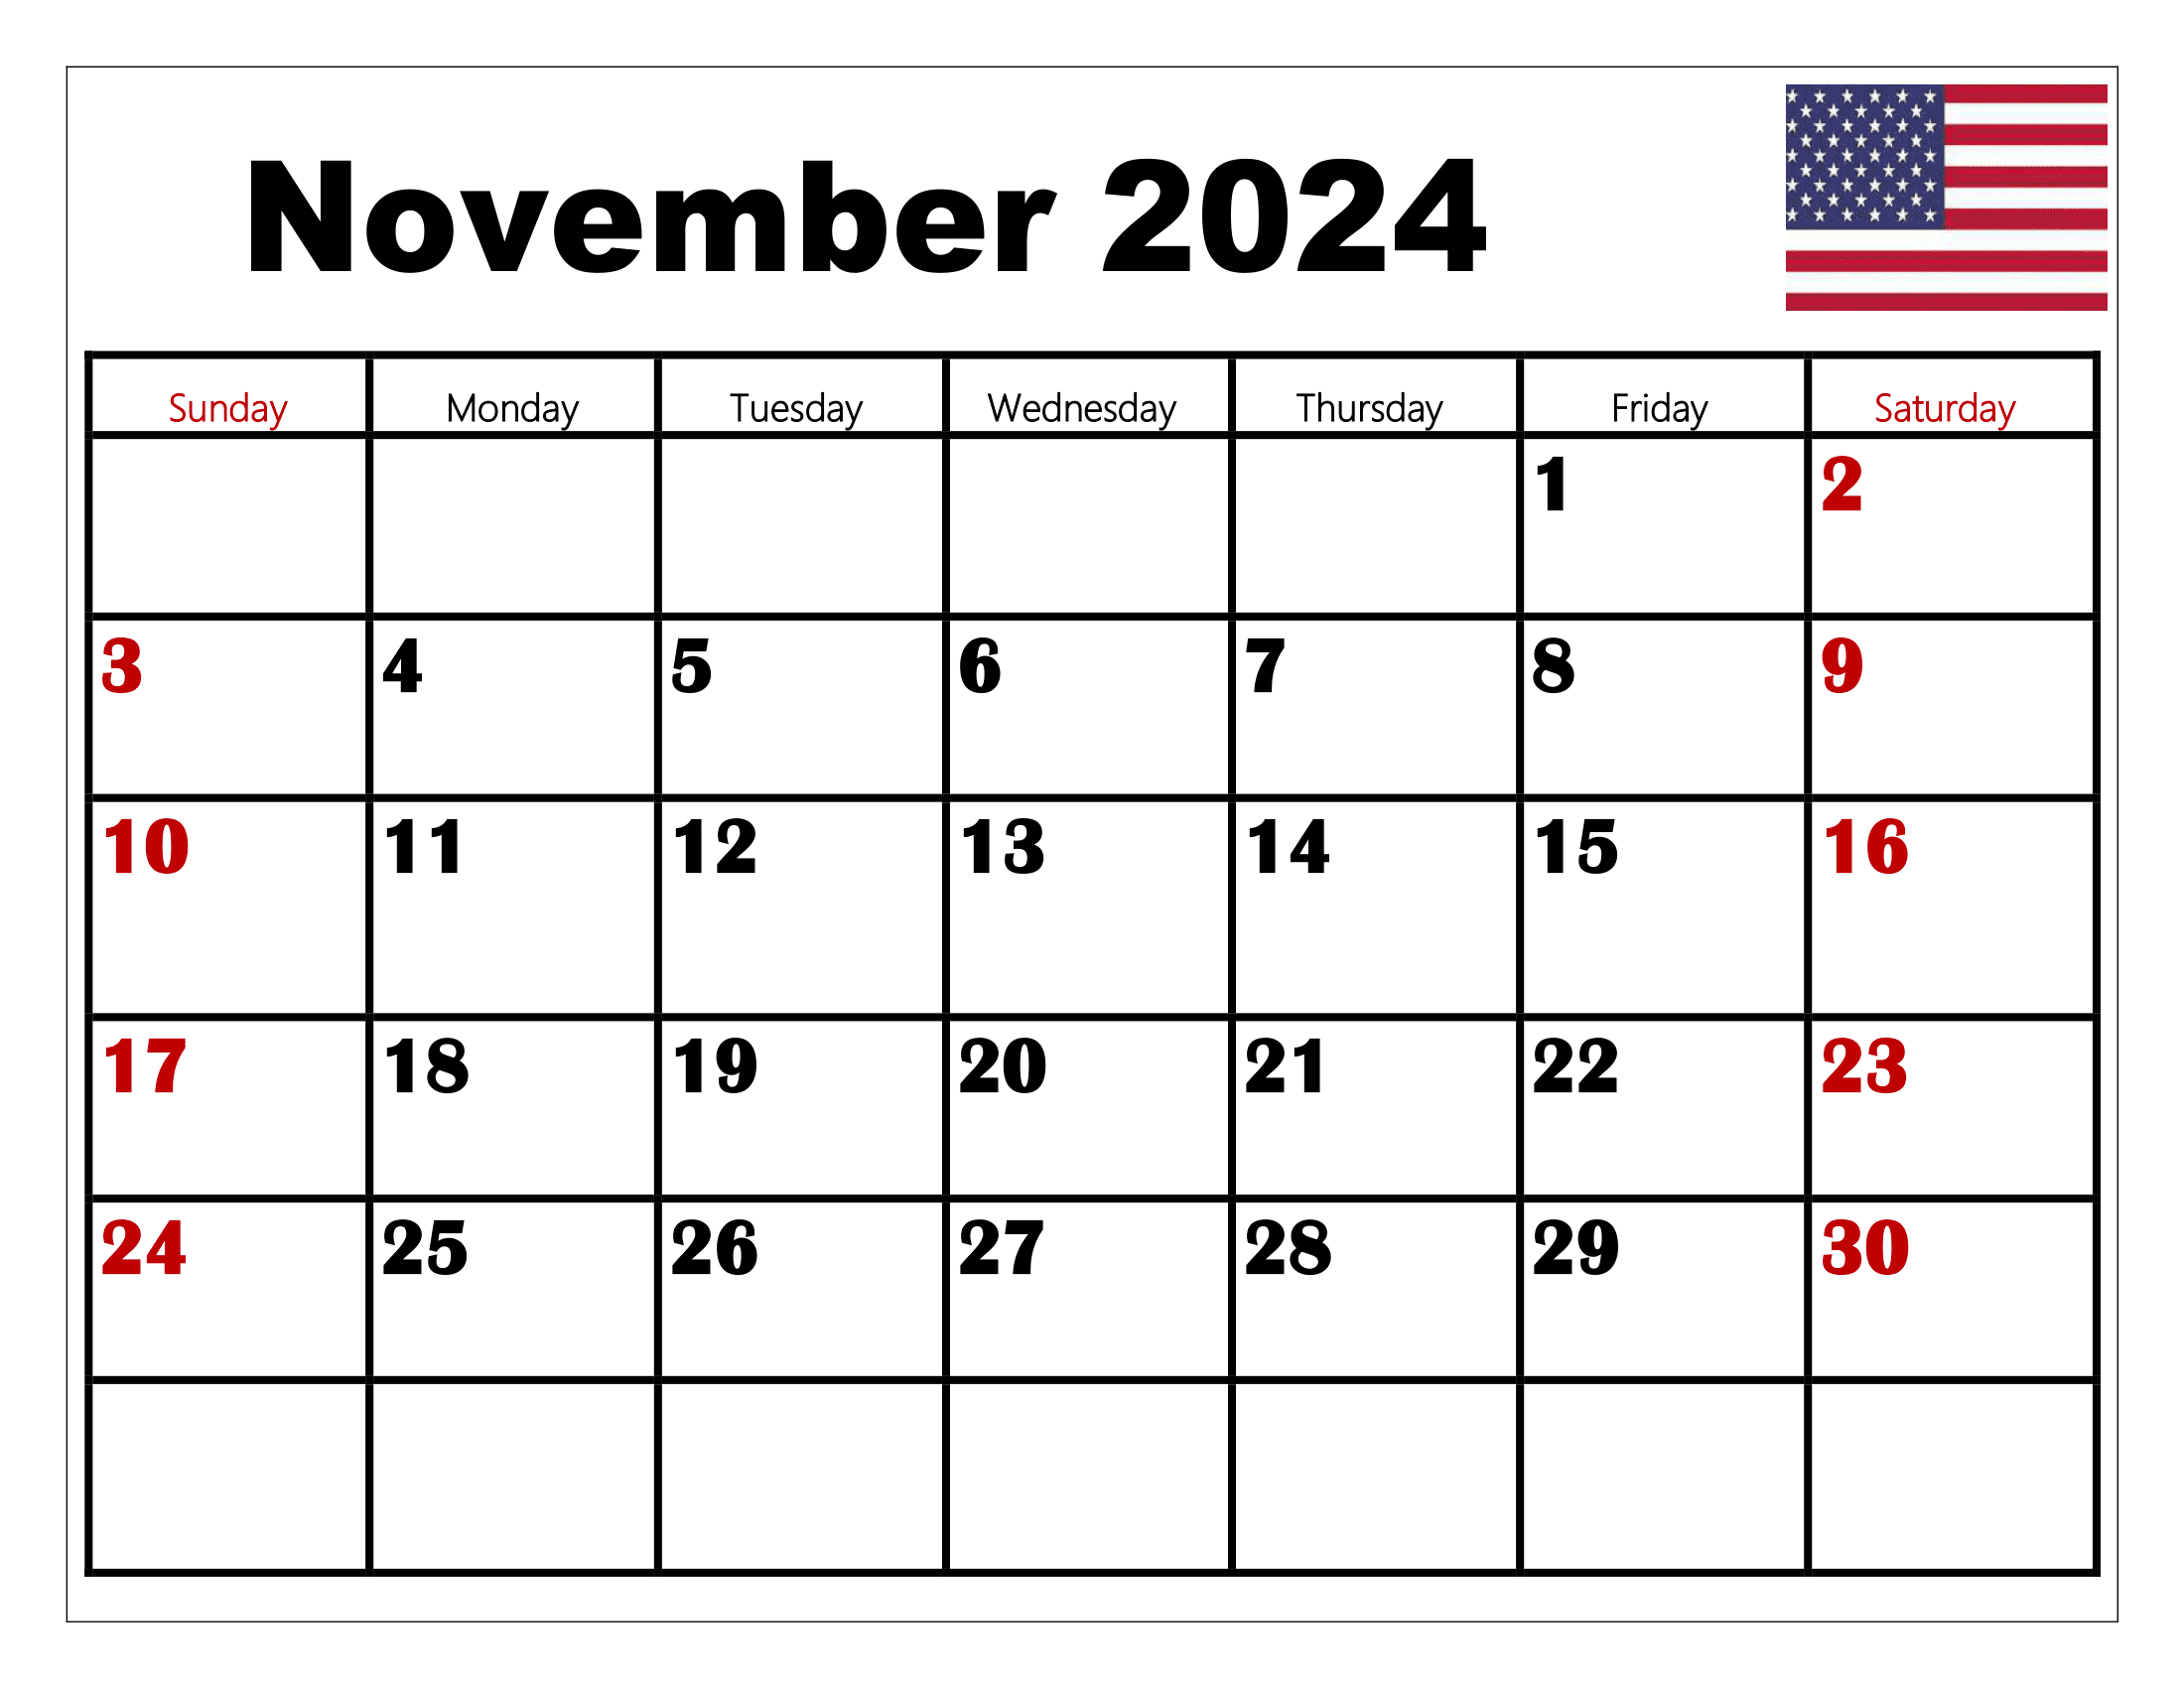 November 2024 Calendar Printable Pdf Template With Holidays for November 2024 Free Printable Calendar